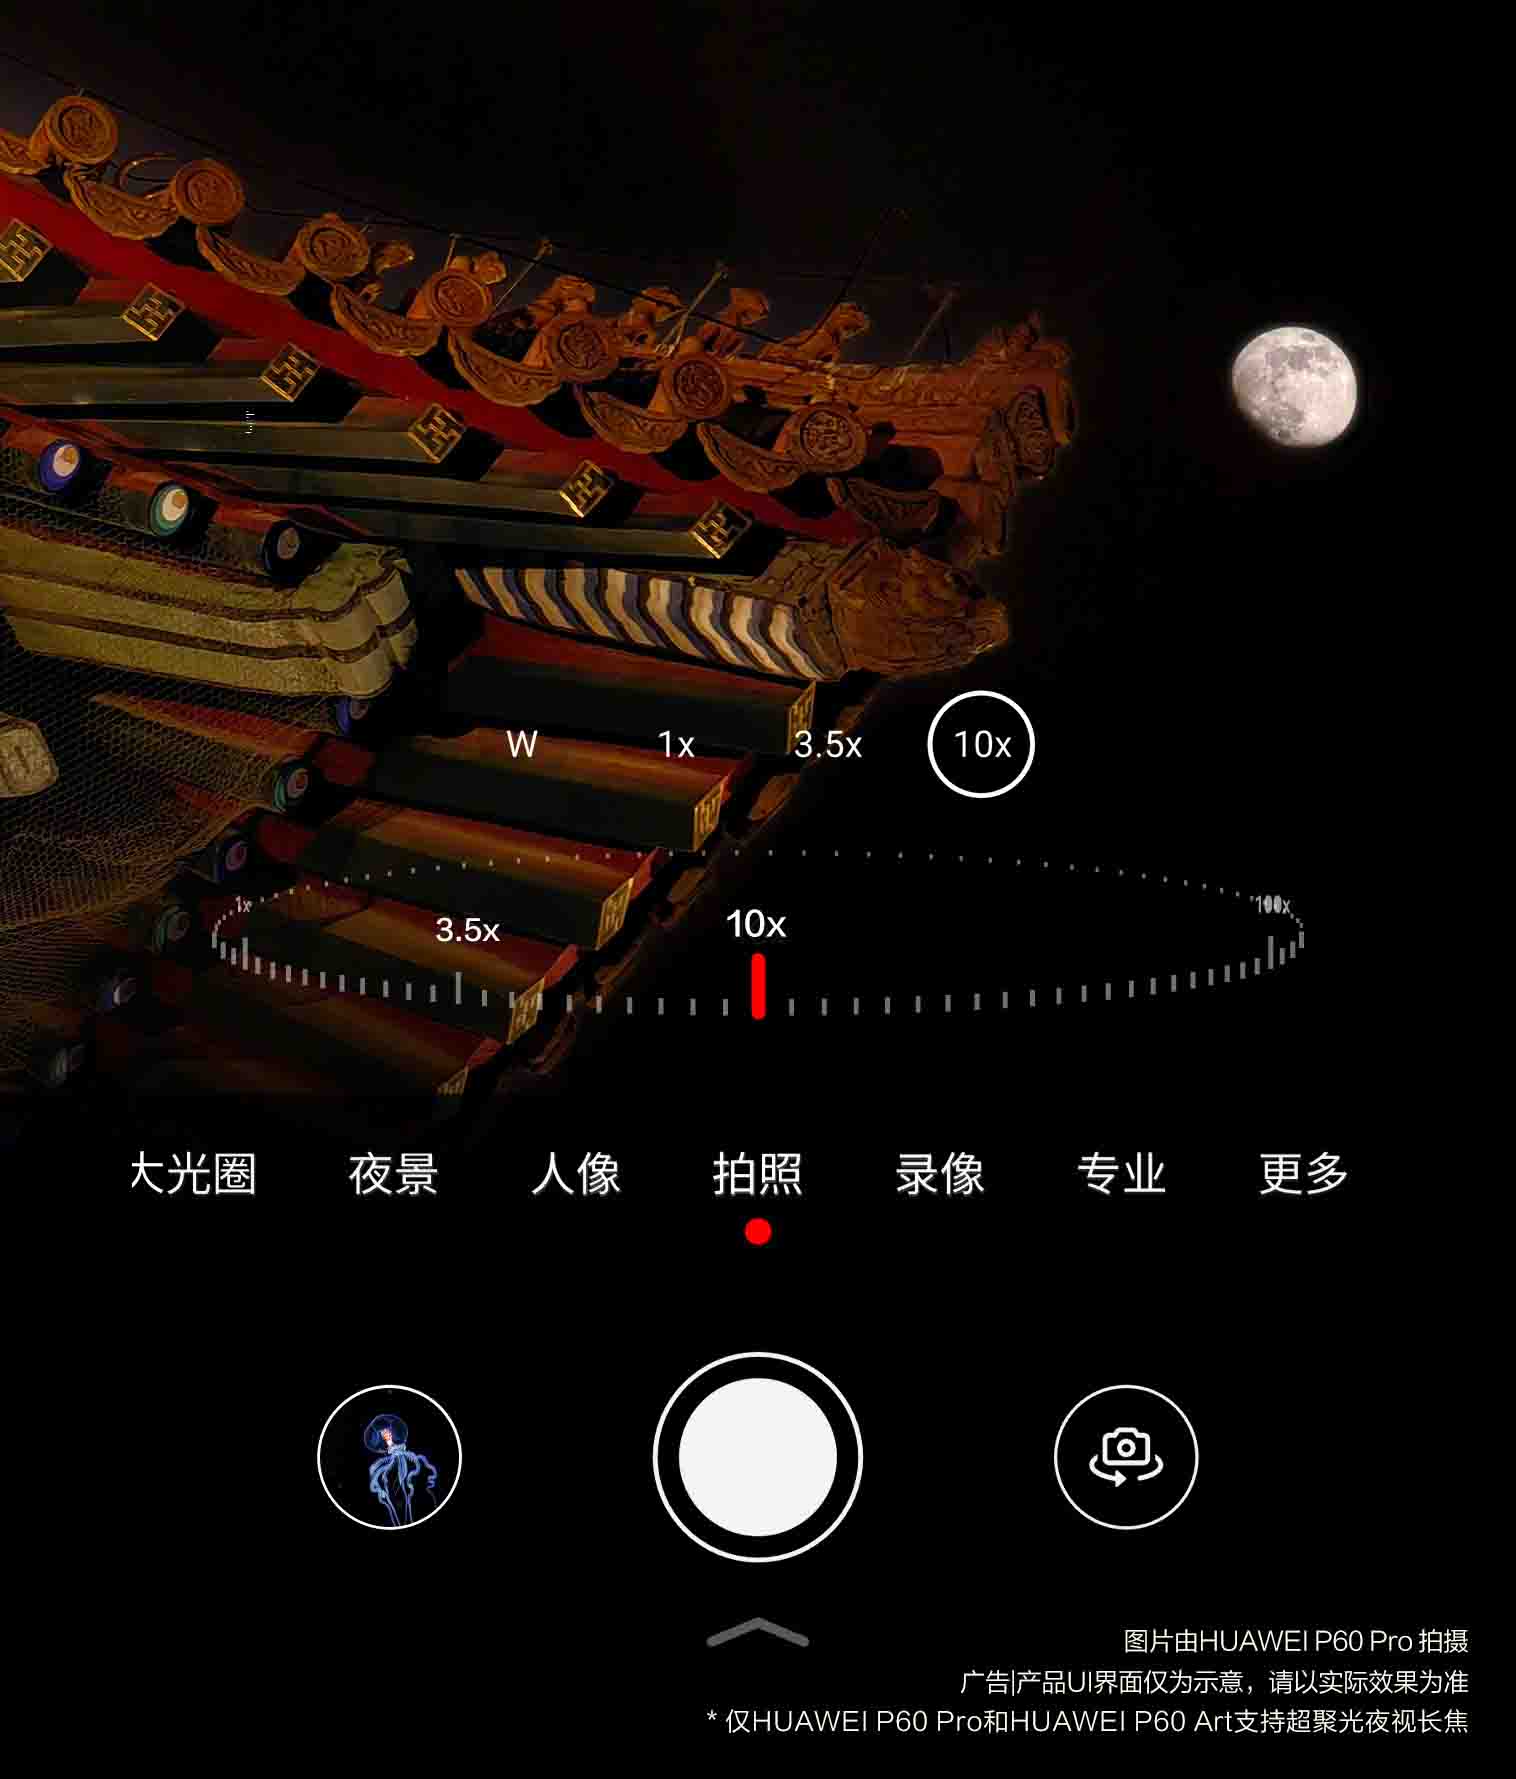 Huawei new camera app